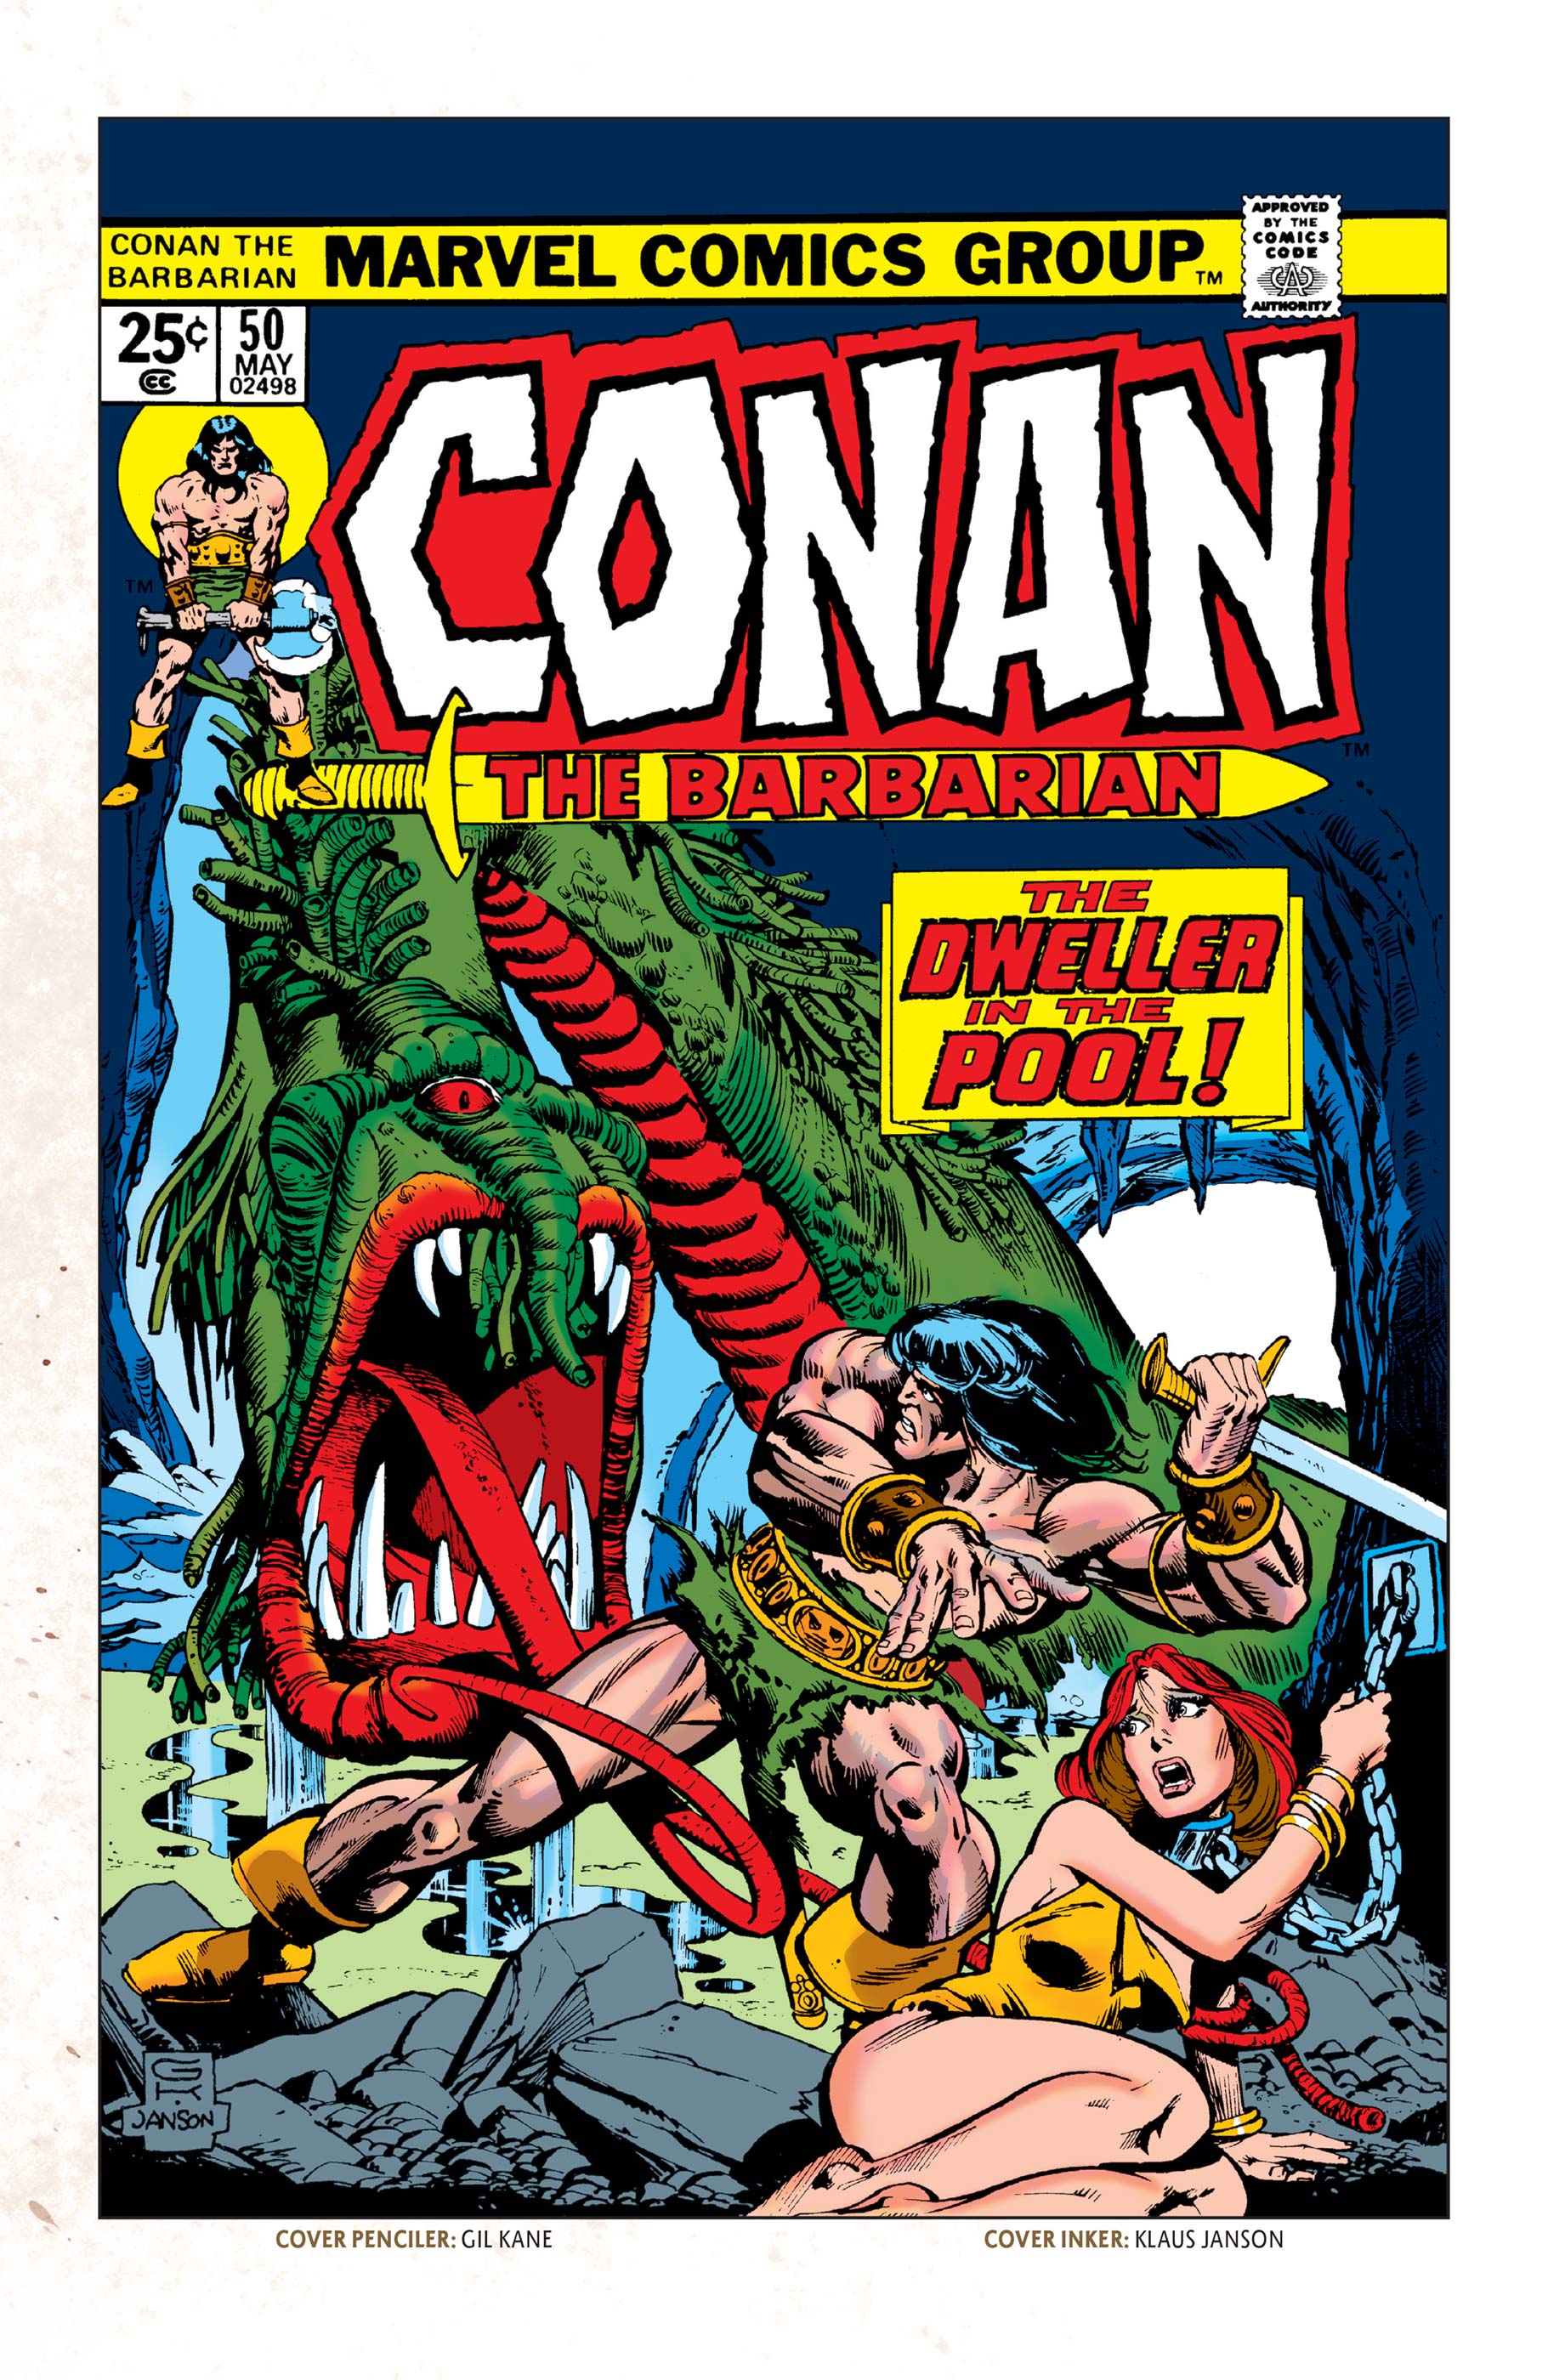 Conan the Barbarian (1970) #50